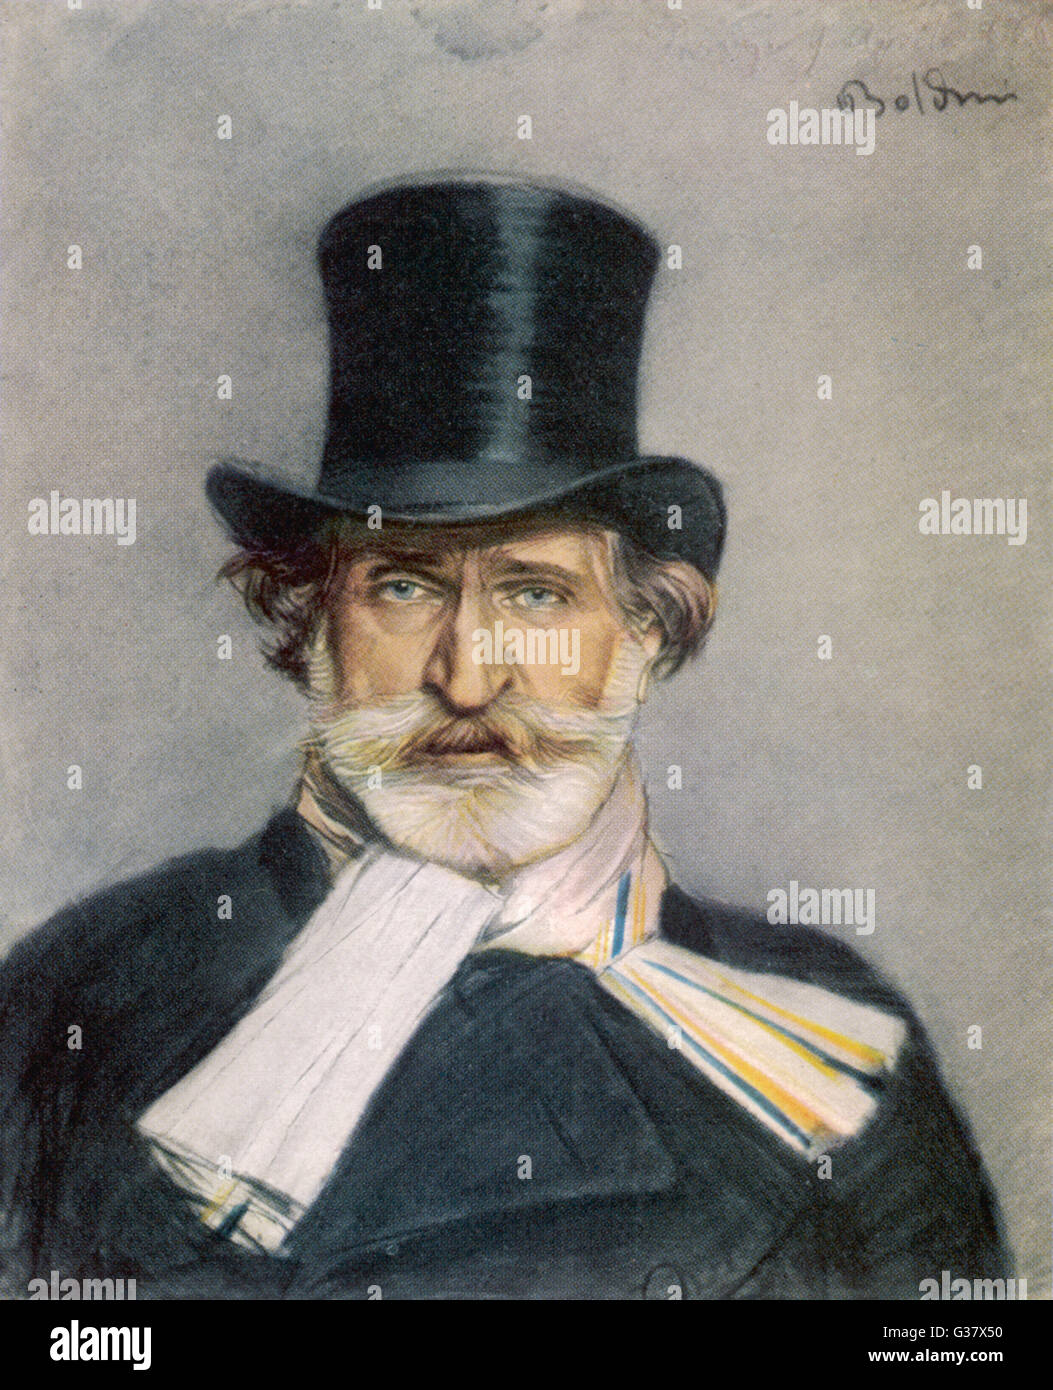 GIUSEPPE VERDI  Italian composer         Date: 1813-1901 Stock Photo